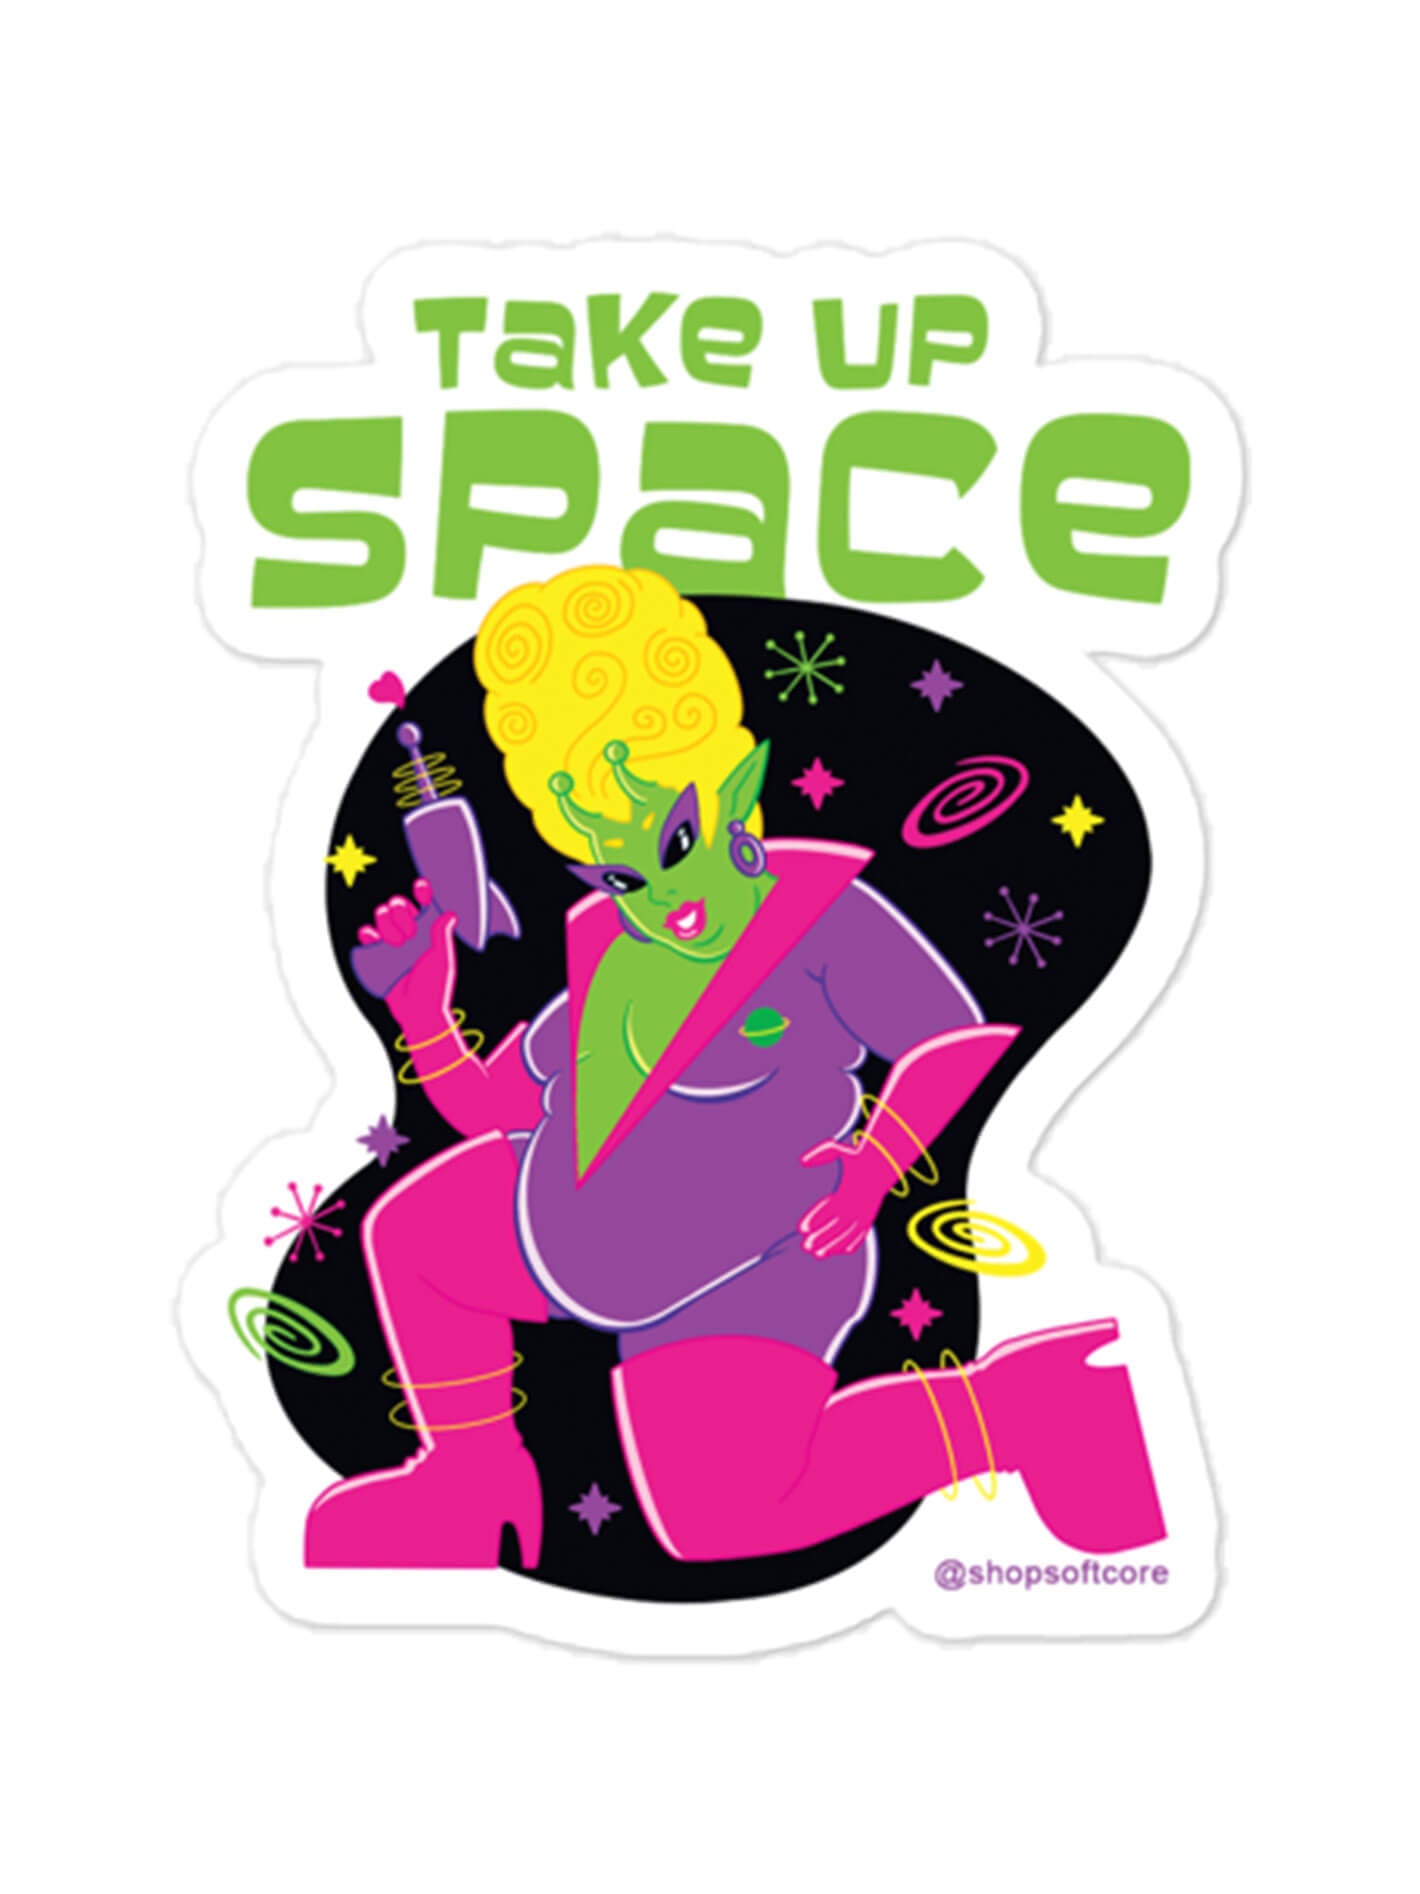 Take up space sticker.